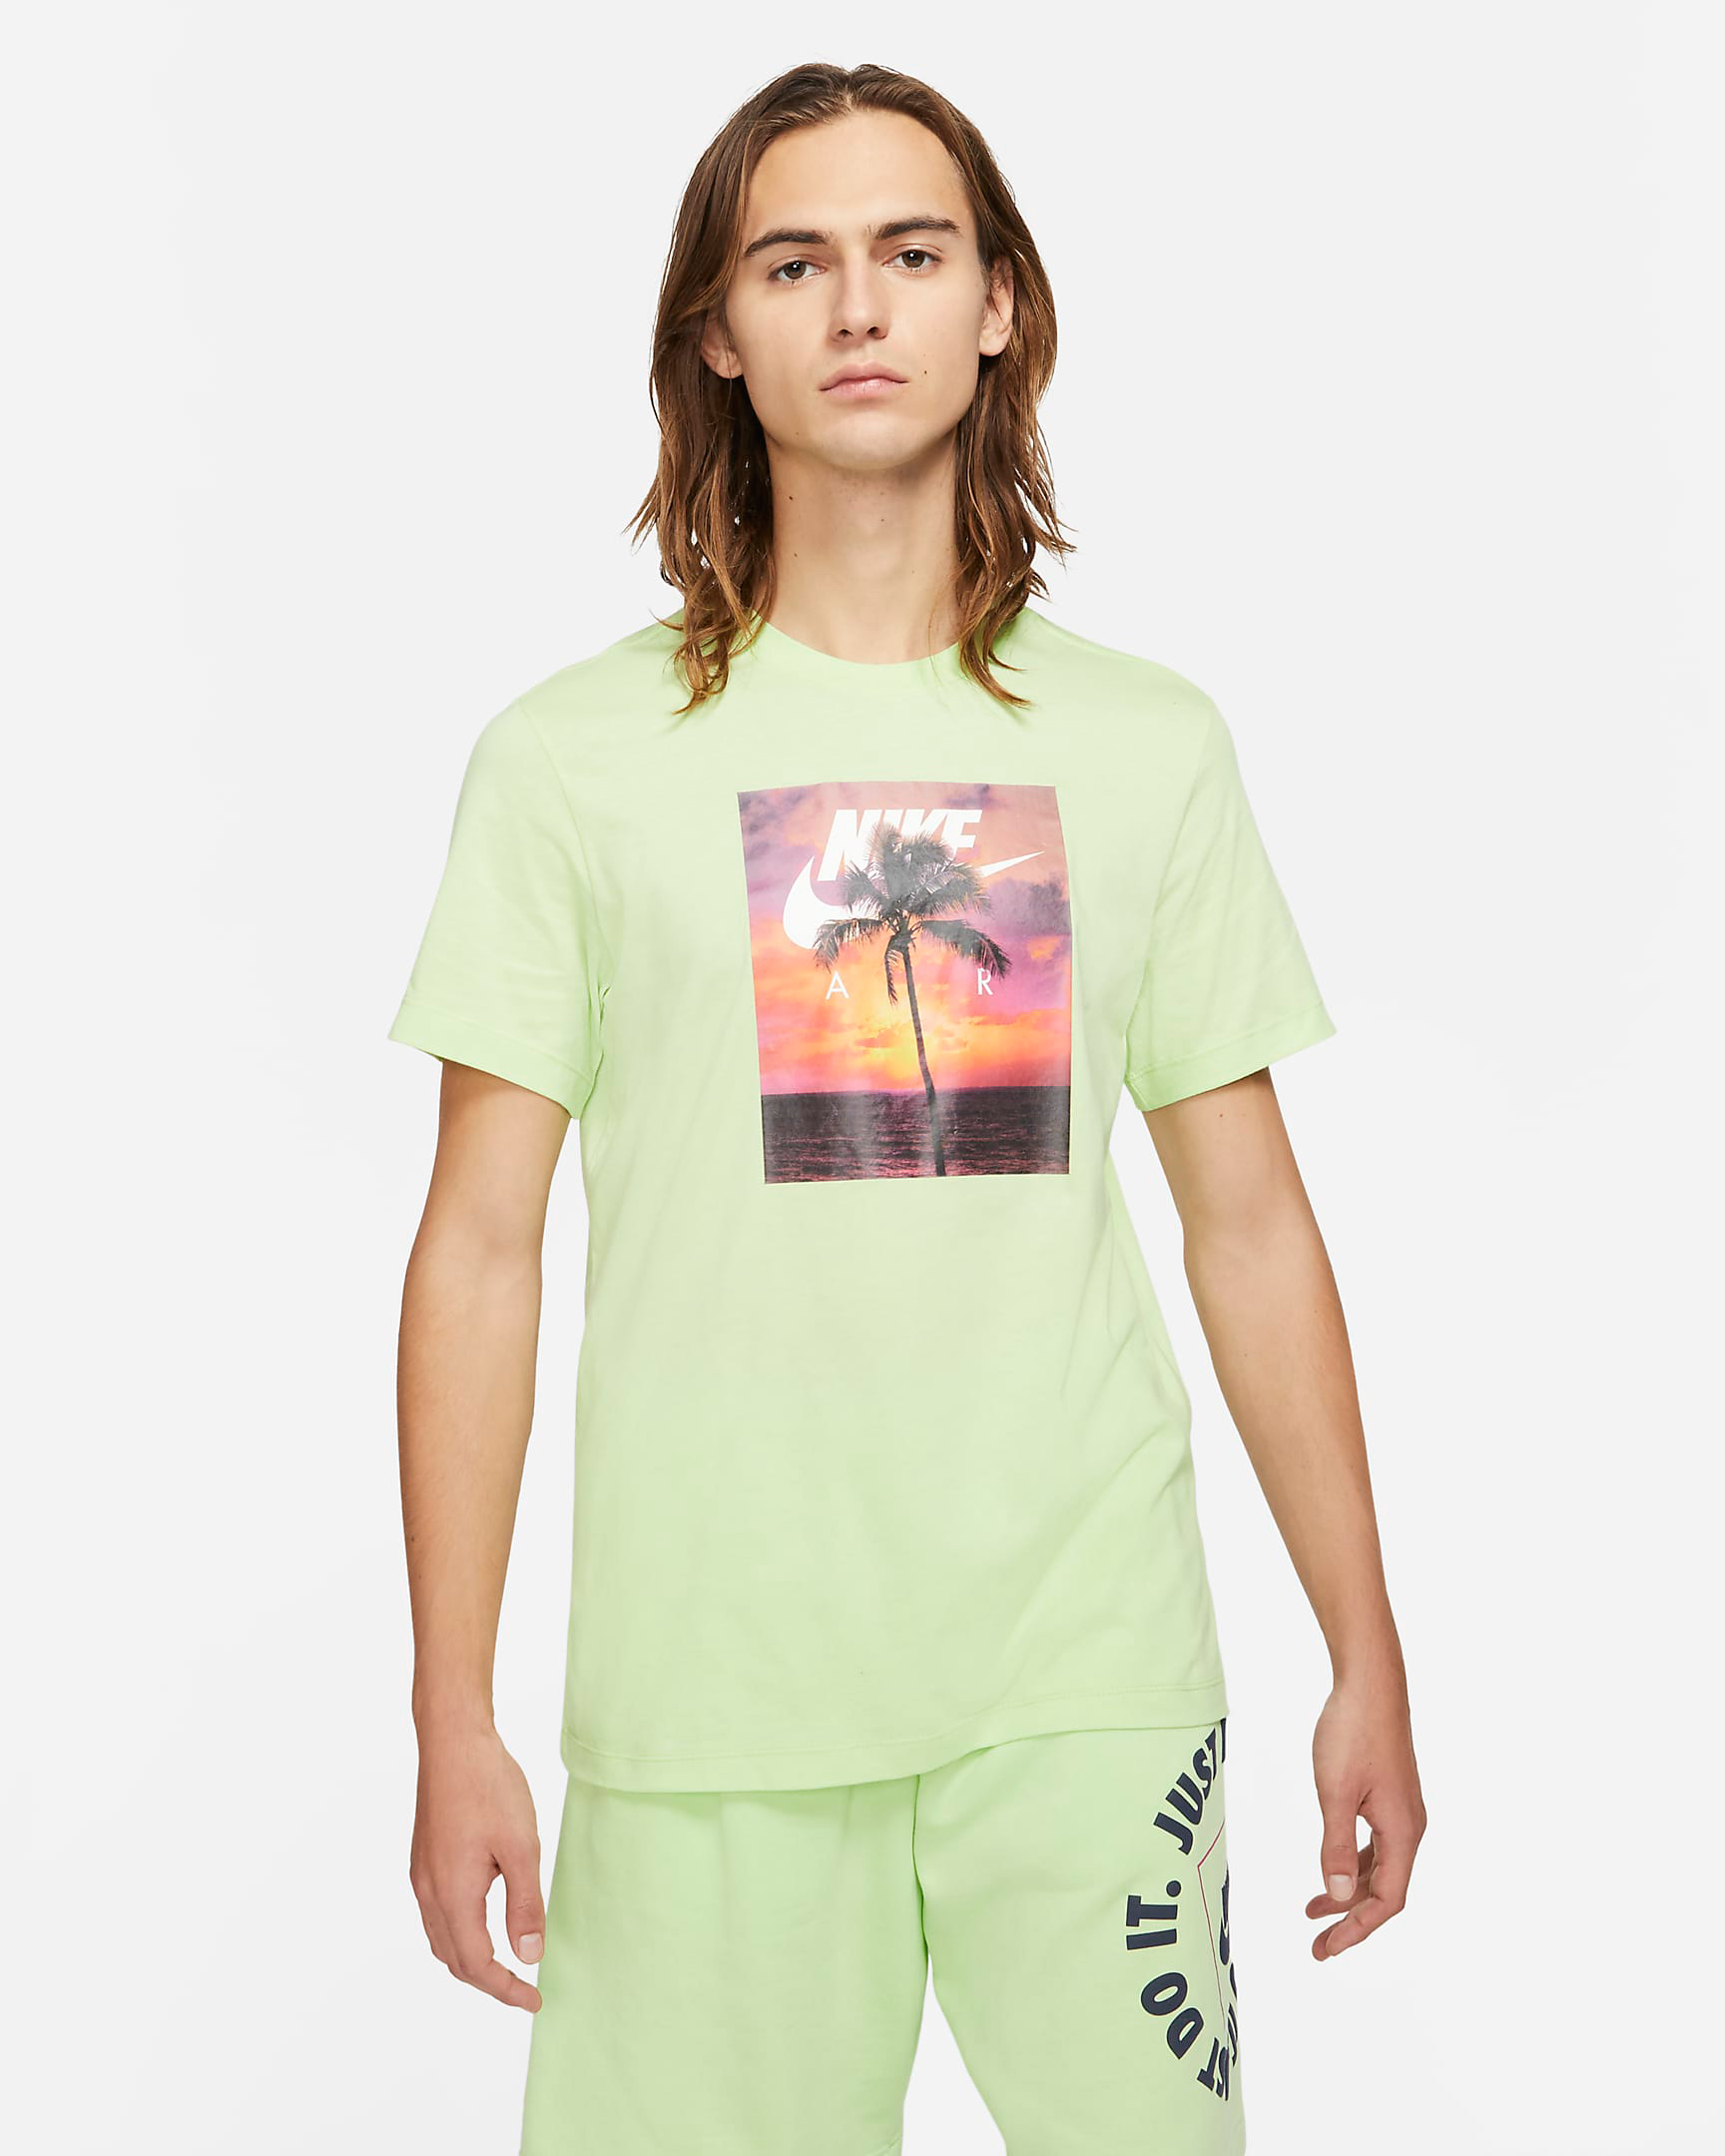 nike-light-liquid-lime-palm-tree-sunset-shirt